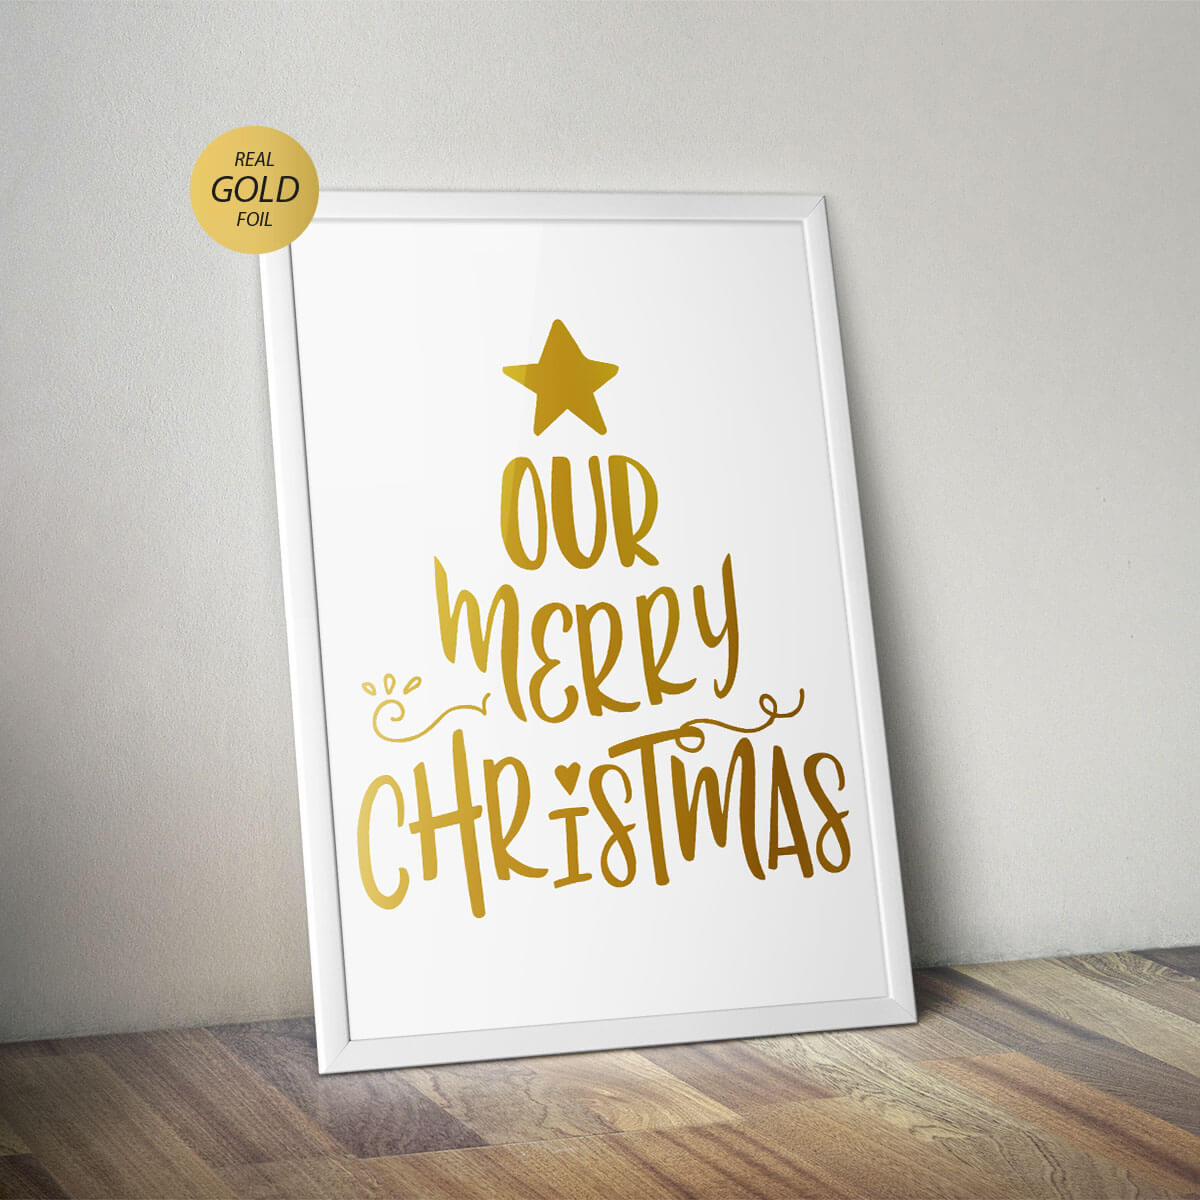 Christmas Wall Art, ‘Our Merry Christmas’ Gold Foiled